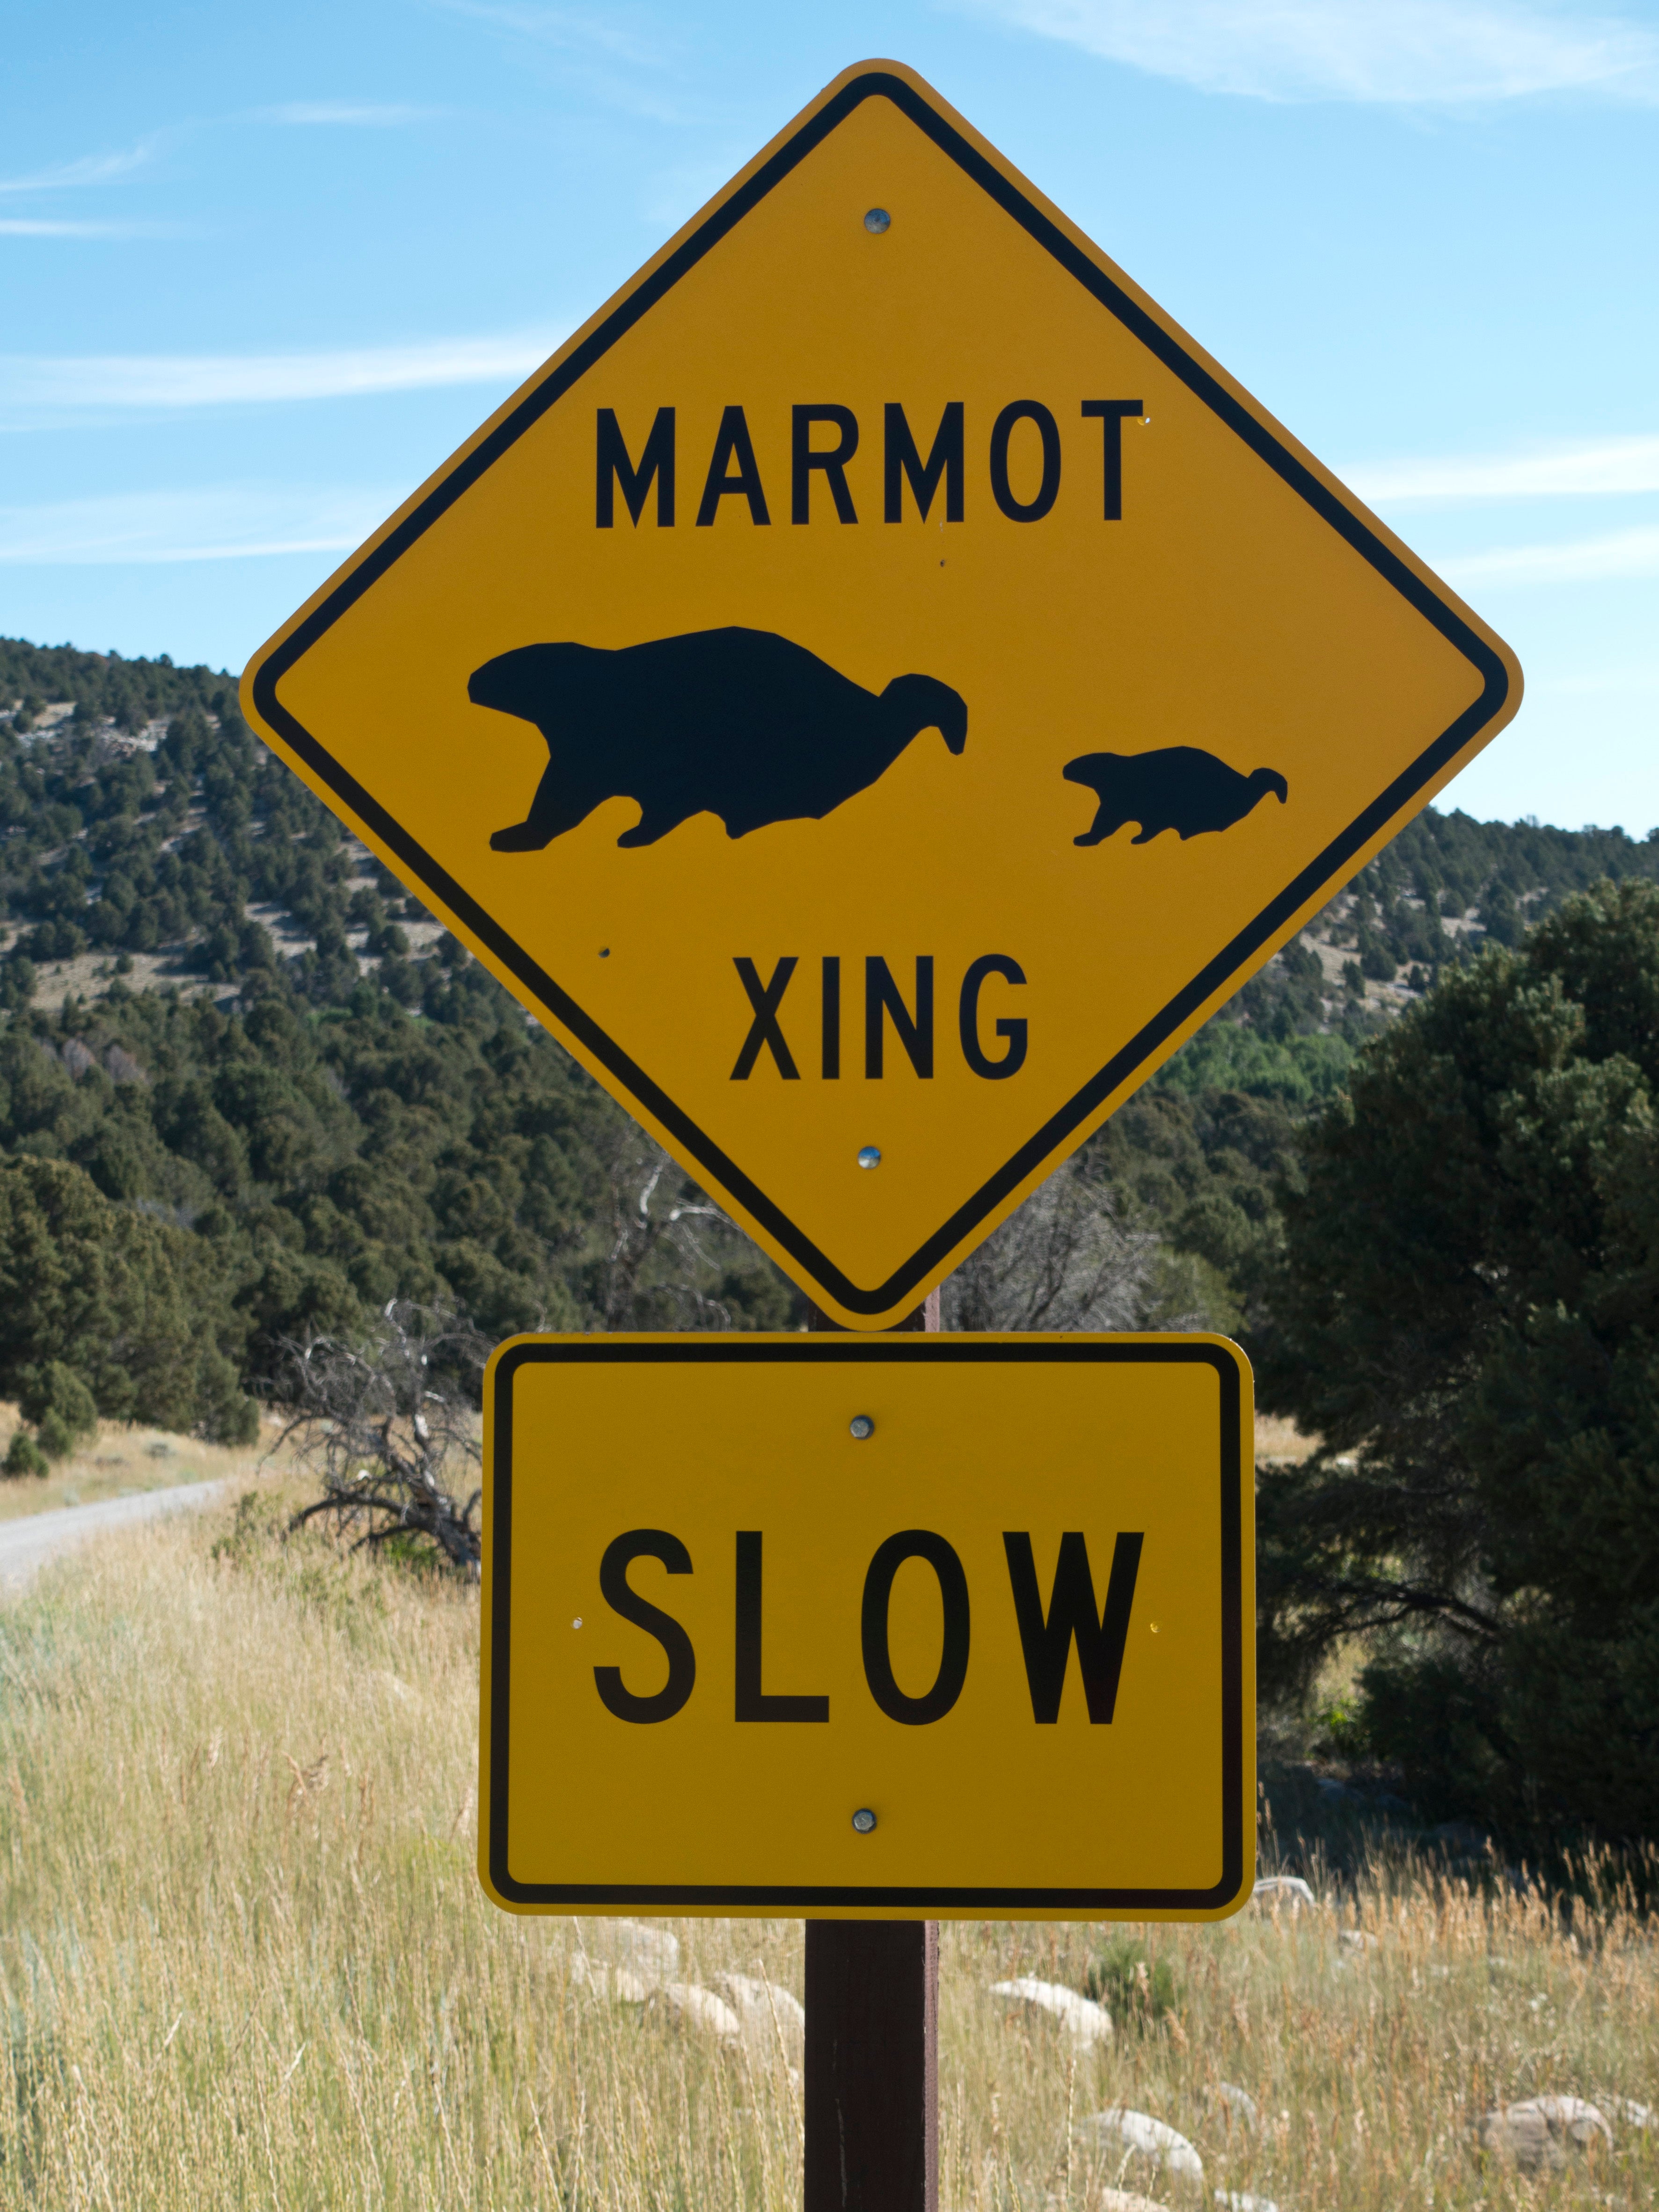 Marmot crossing